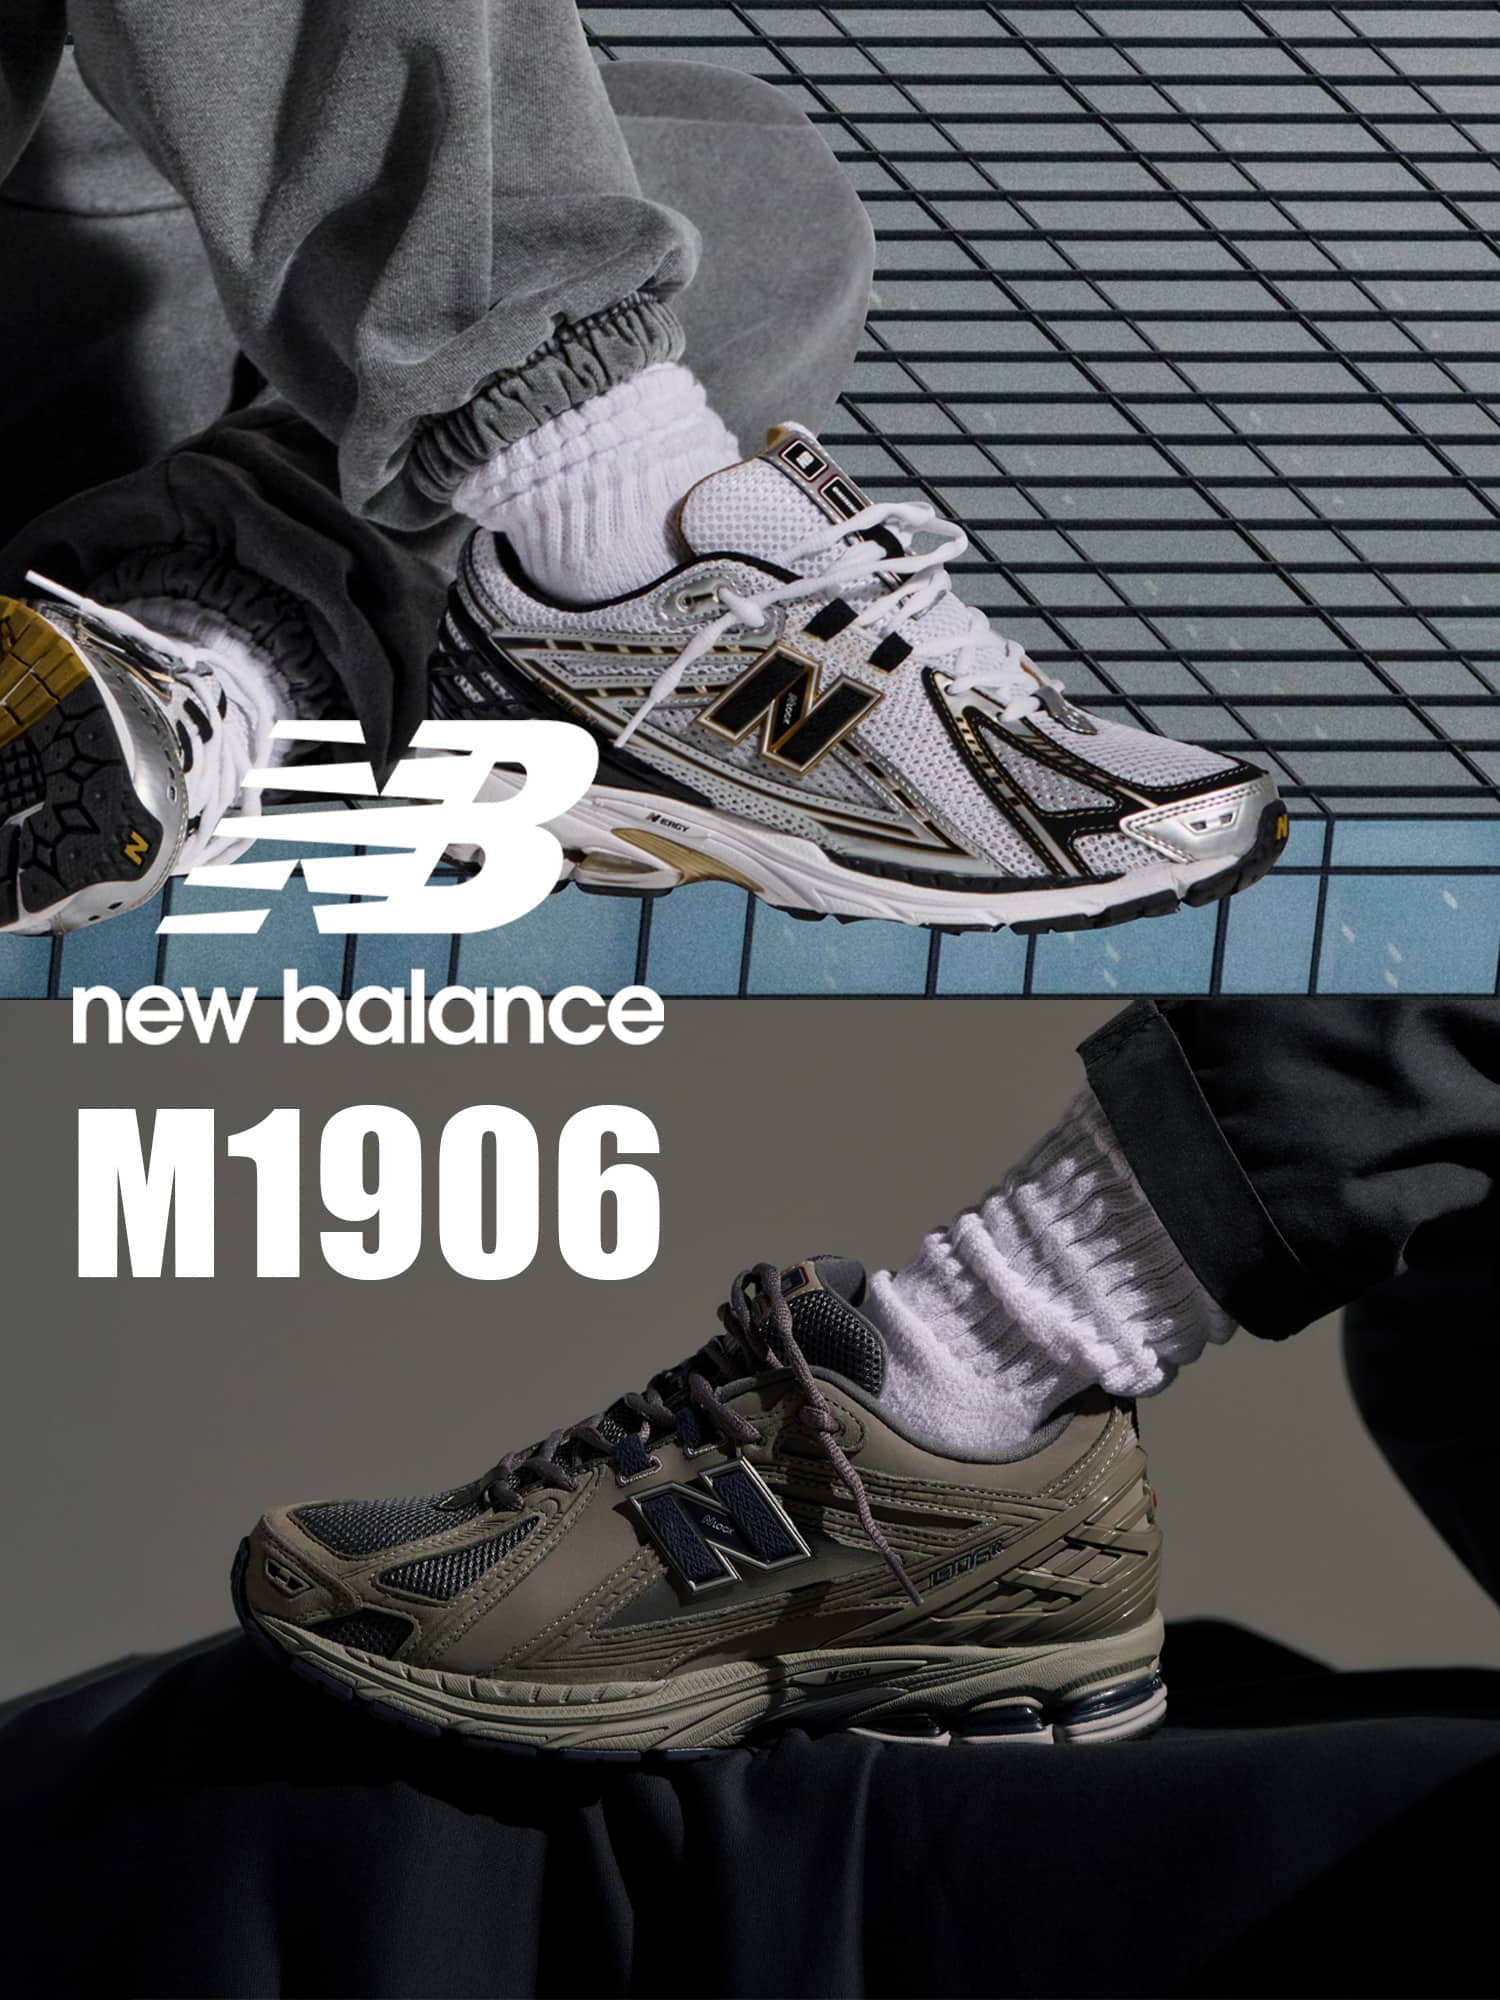 New Balance M1906